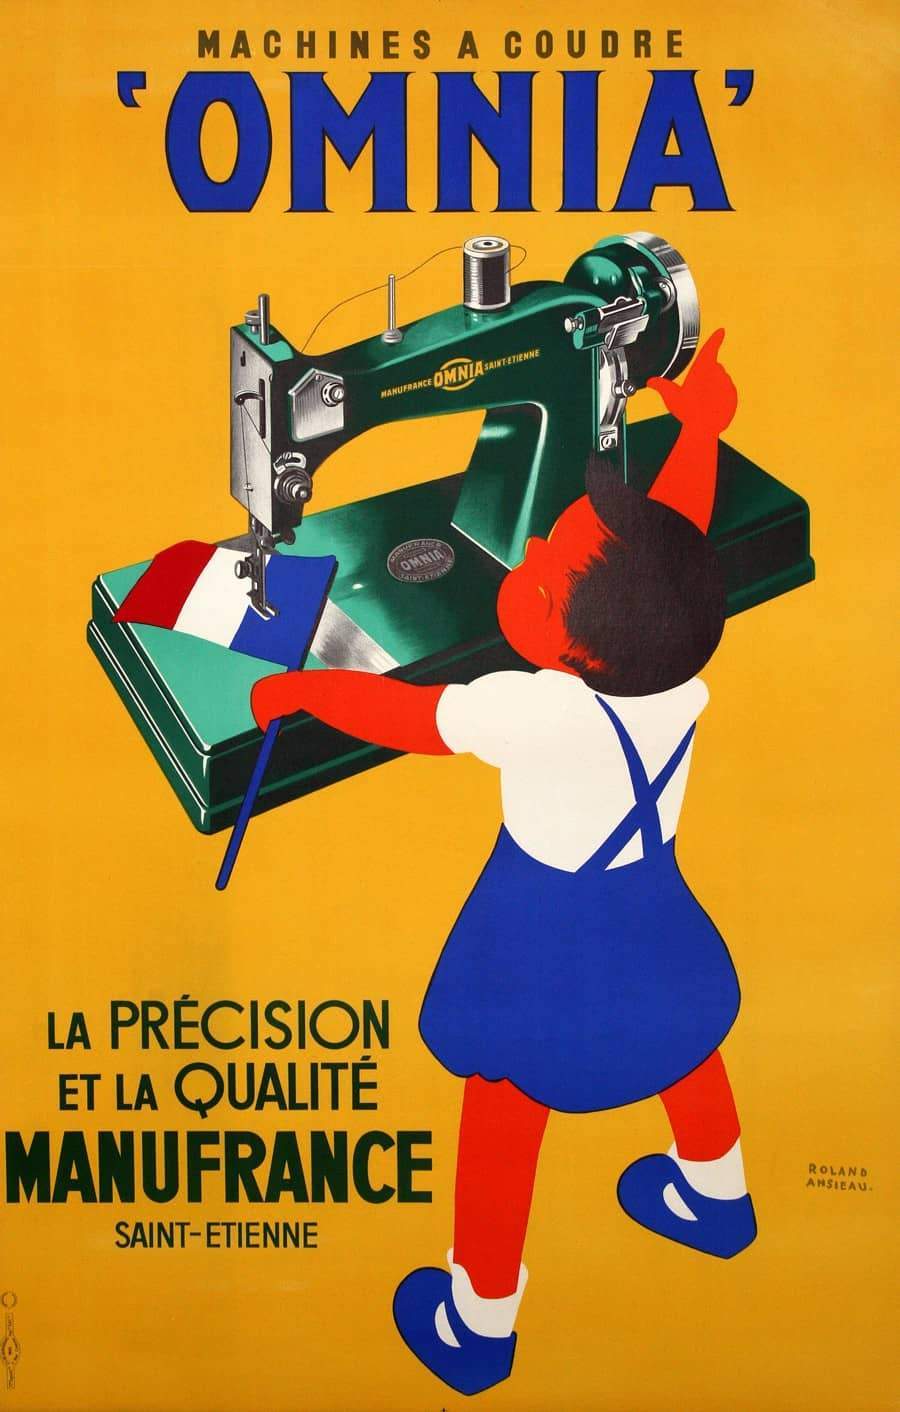 Original French Omnia Sewing Machine Poster by Ansieau c1950